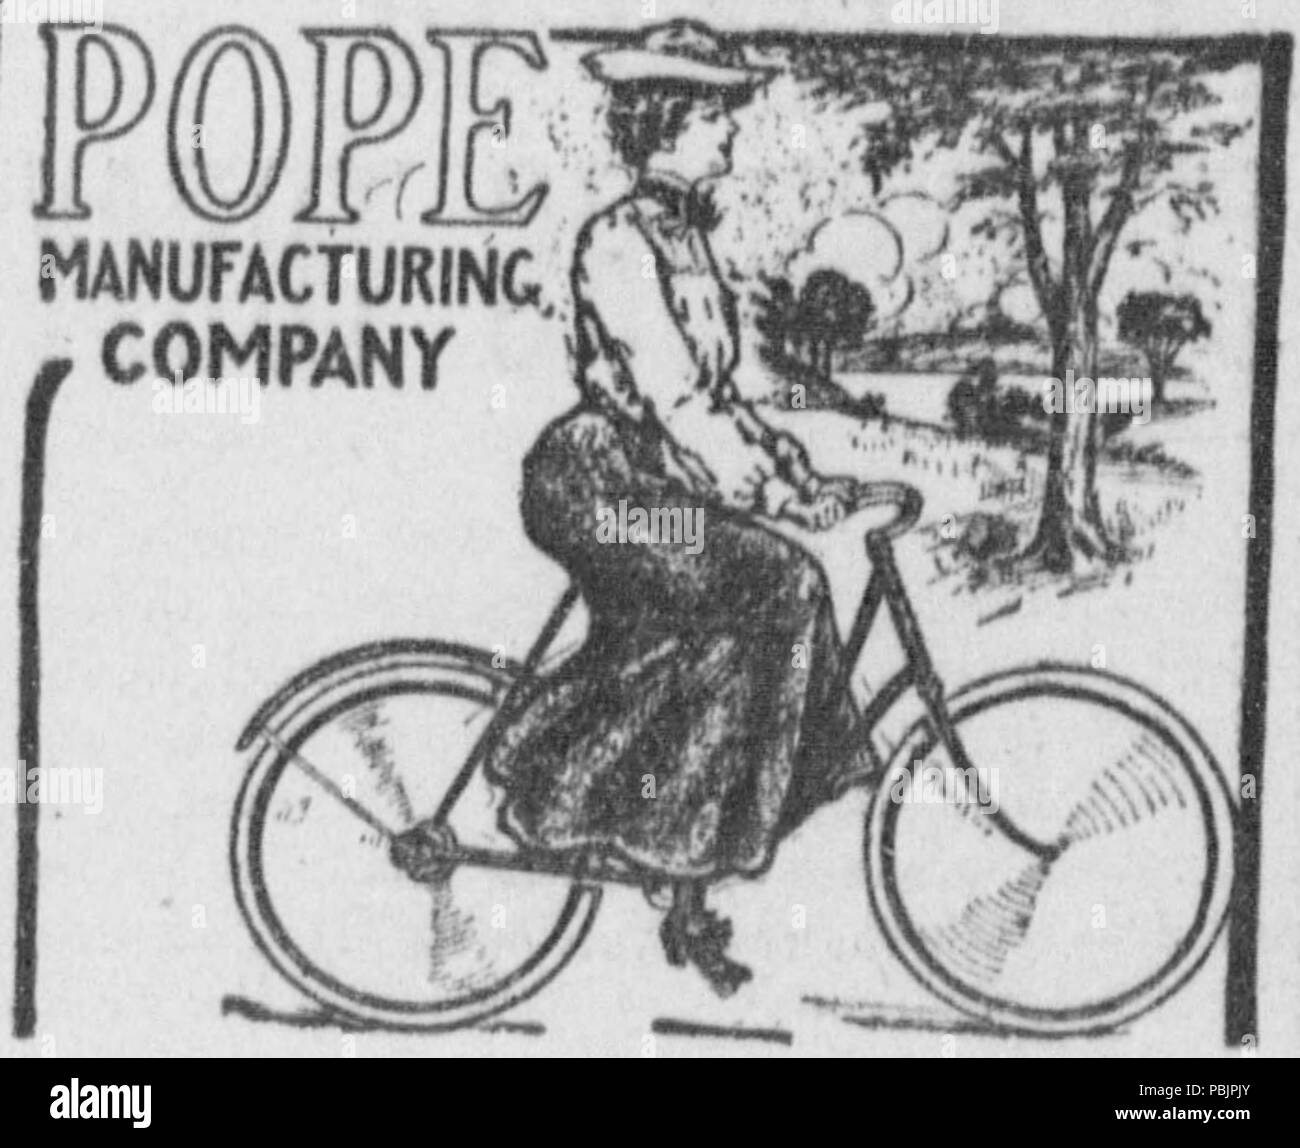 1867 Women's bicycle advertisement (1904 Stock Photo - Alamy